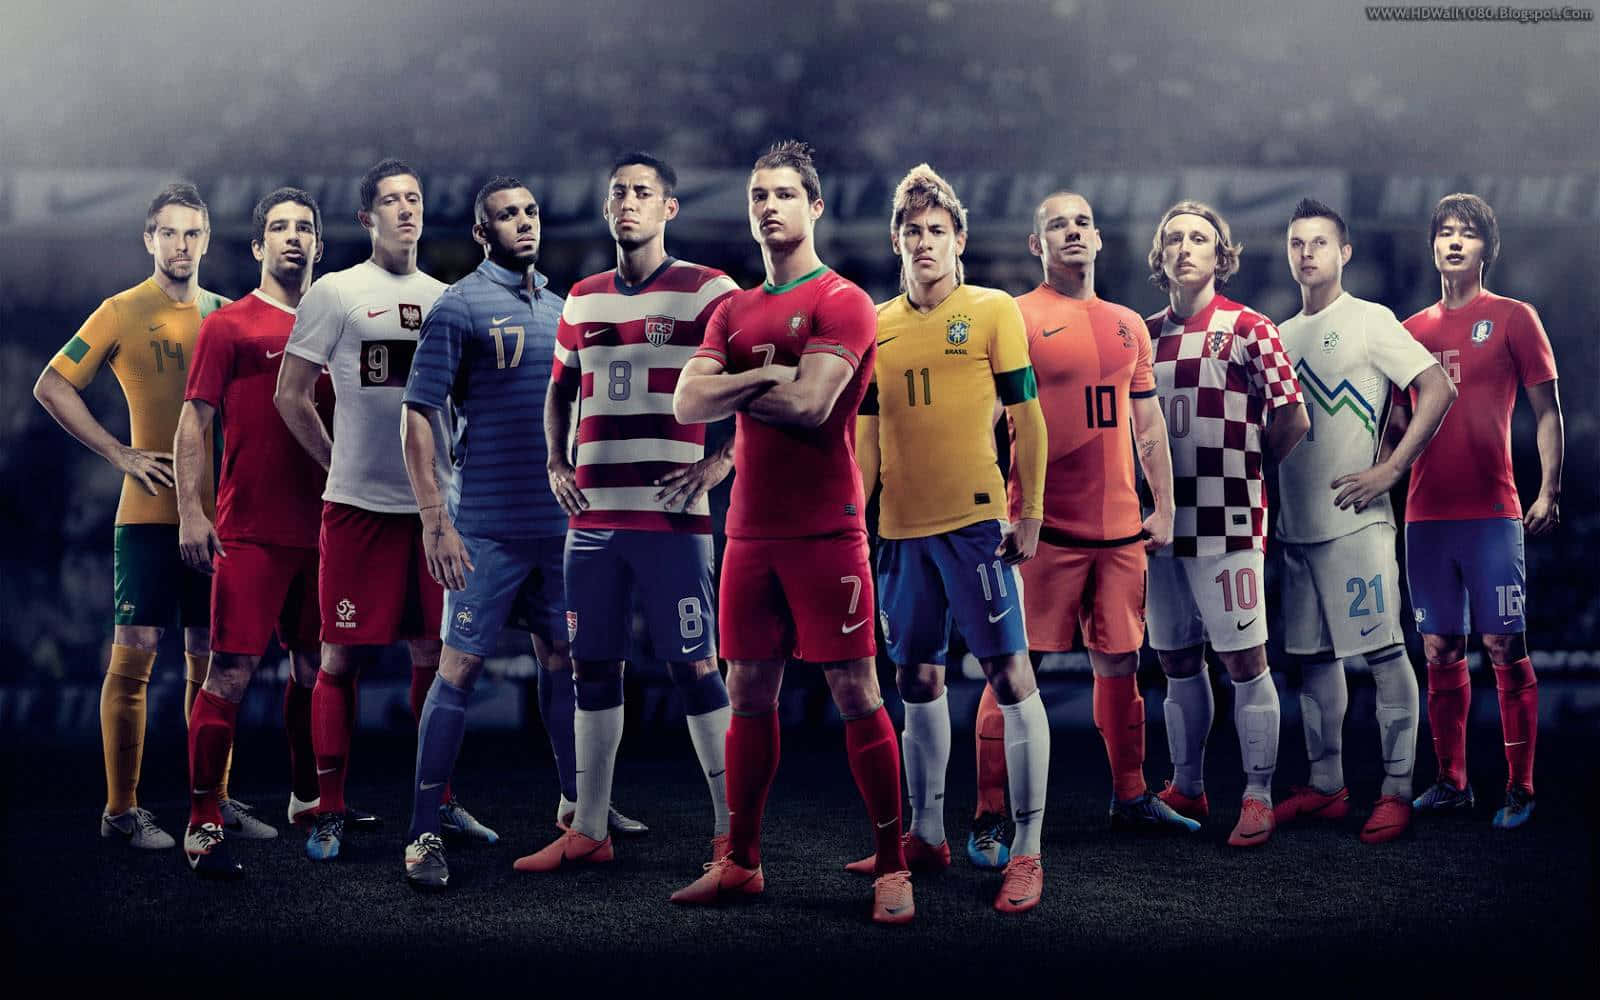 Soccer Unites the World